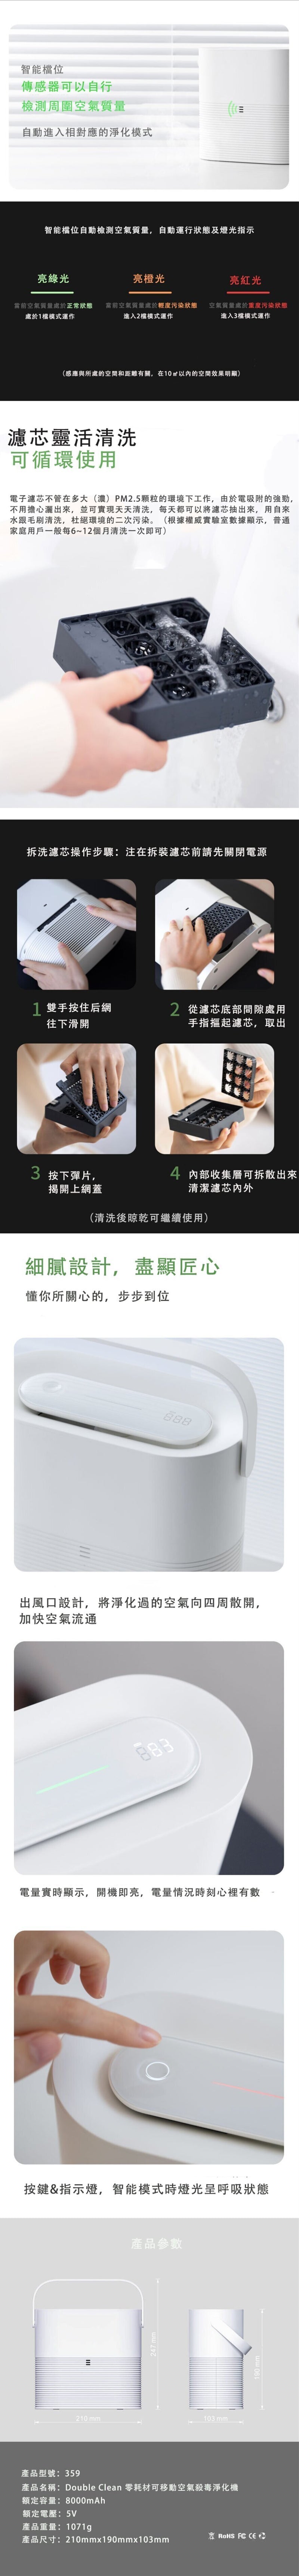 Double Clean - Zero-consumables portable air disinfection purifier | Wireless air purifier | Portable air freshener 359